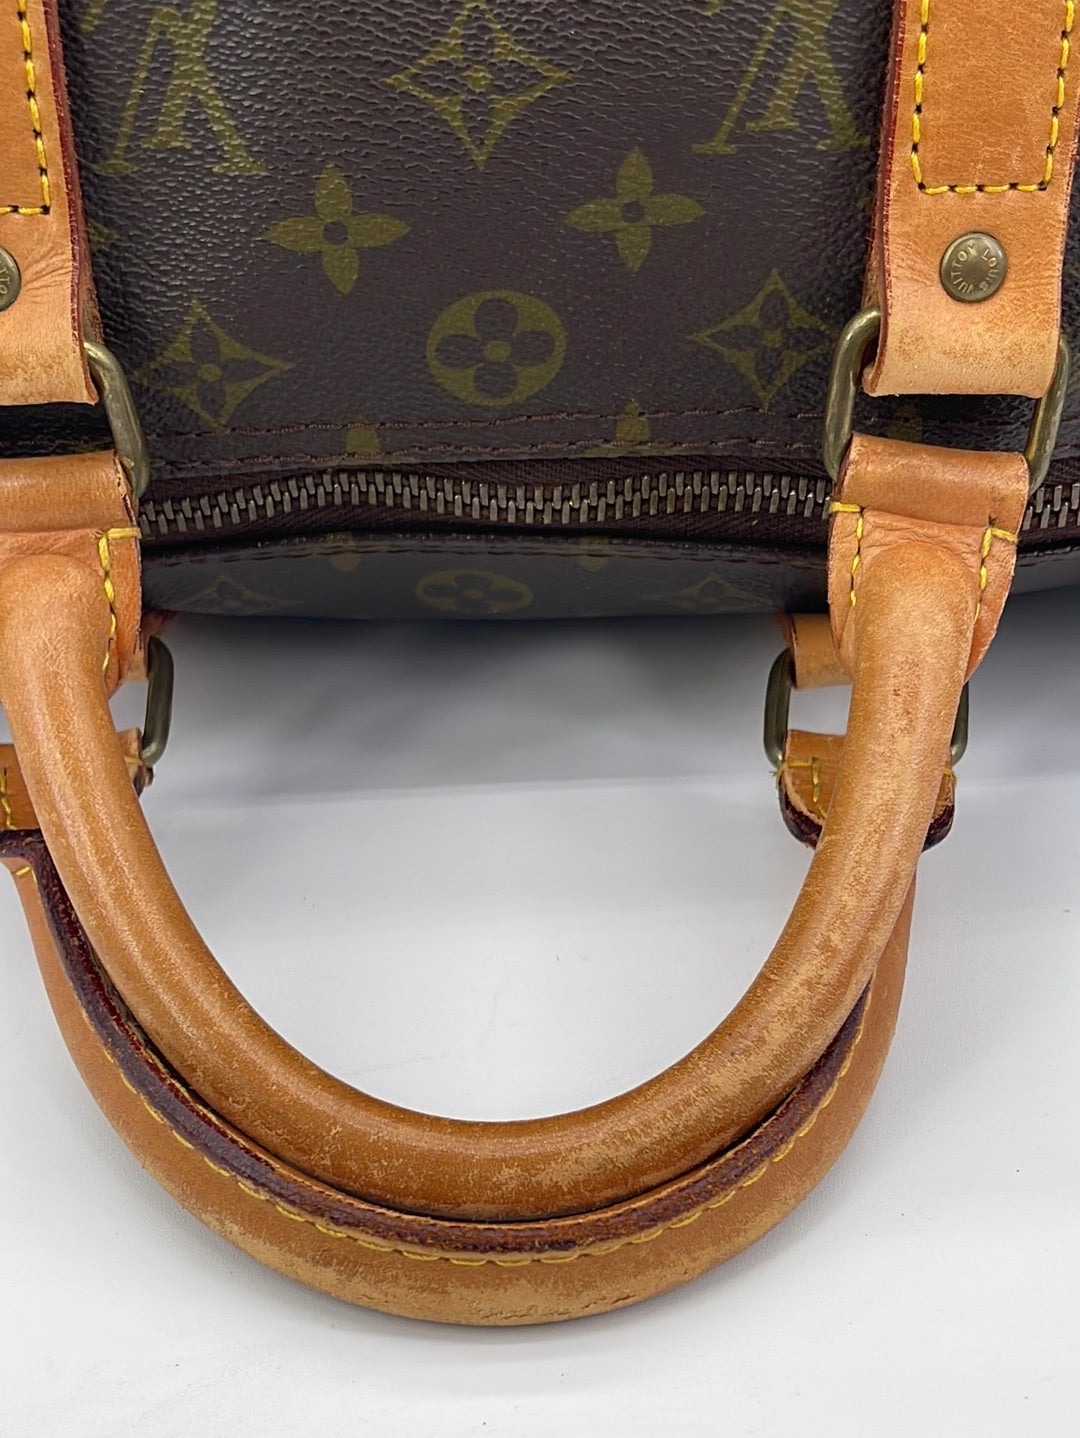 Authentic Vintage Louis Vuitton Keepall 45 Travel Bag